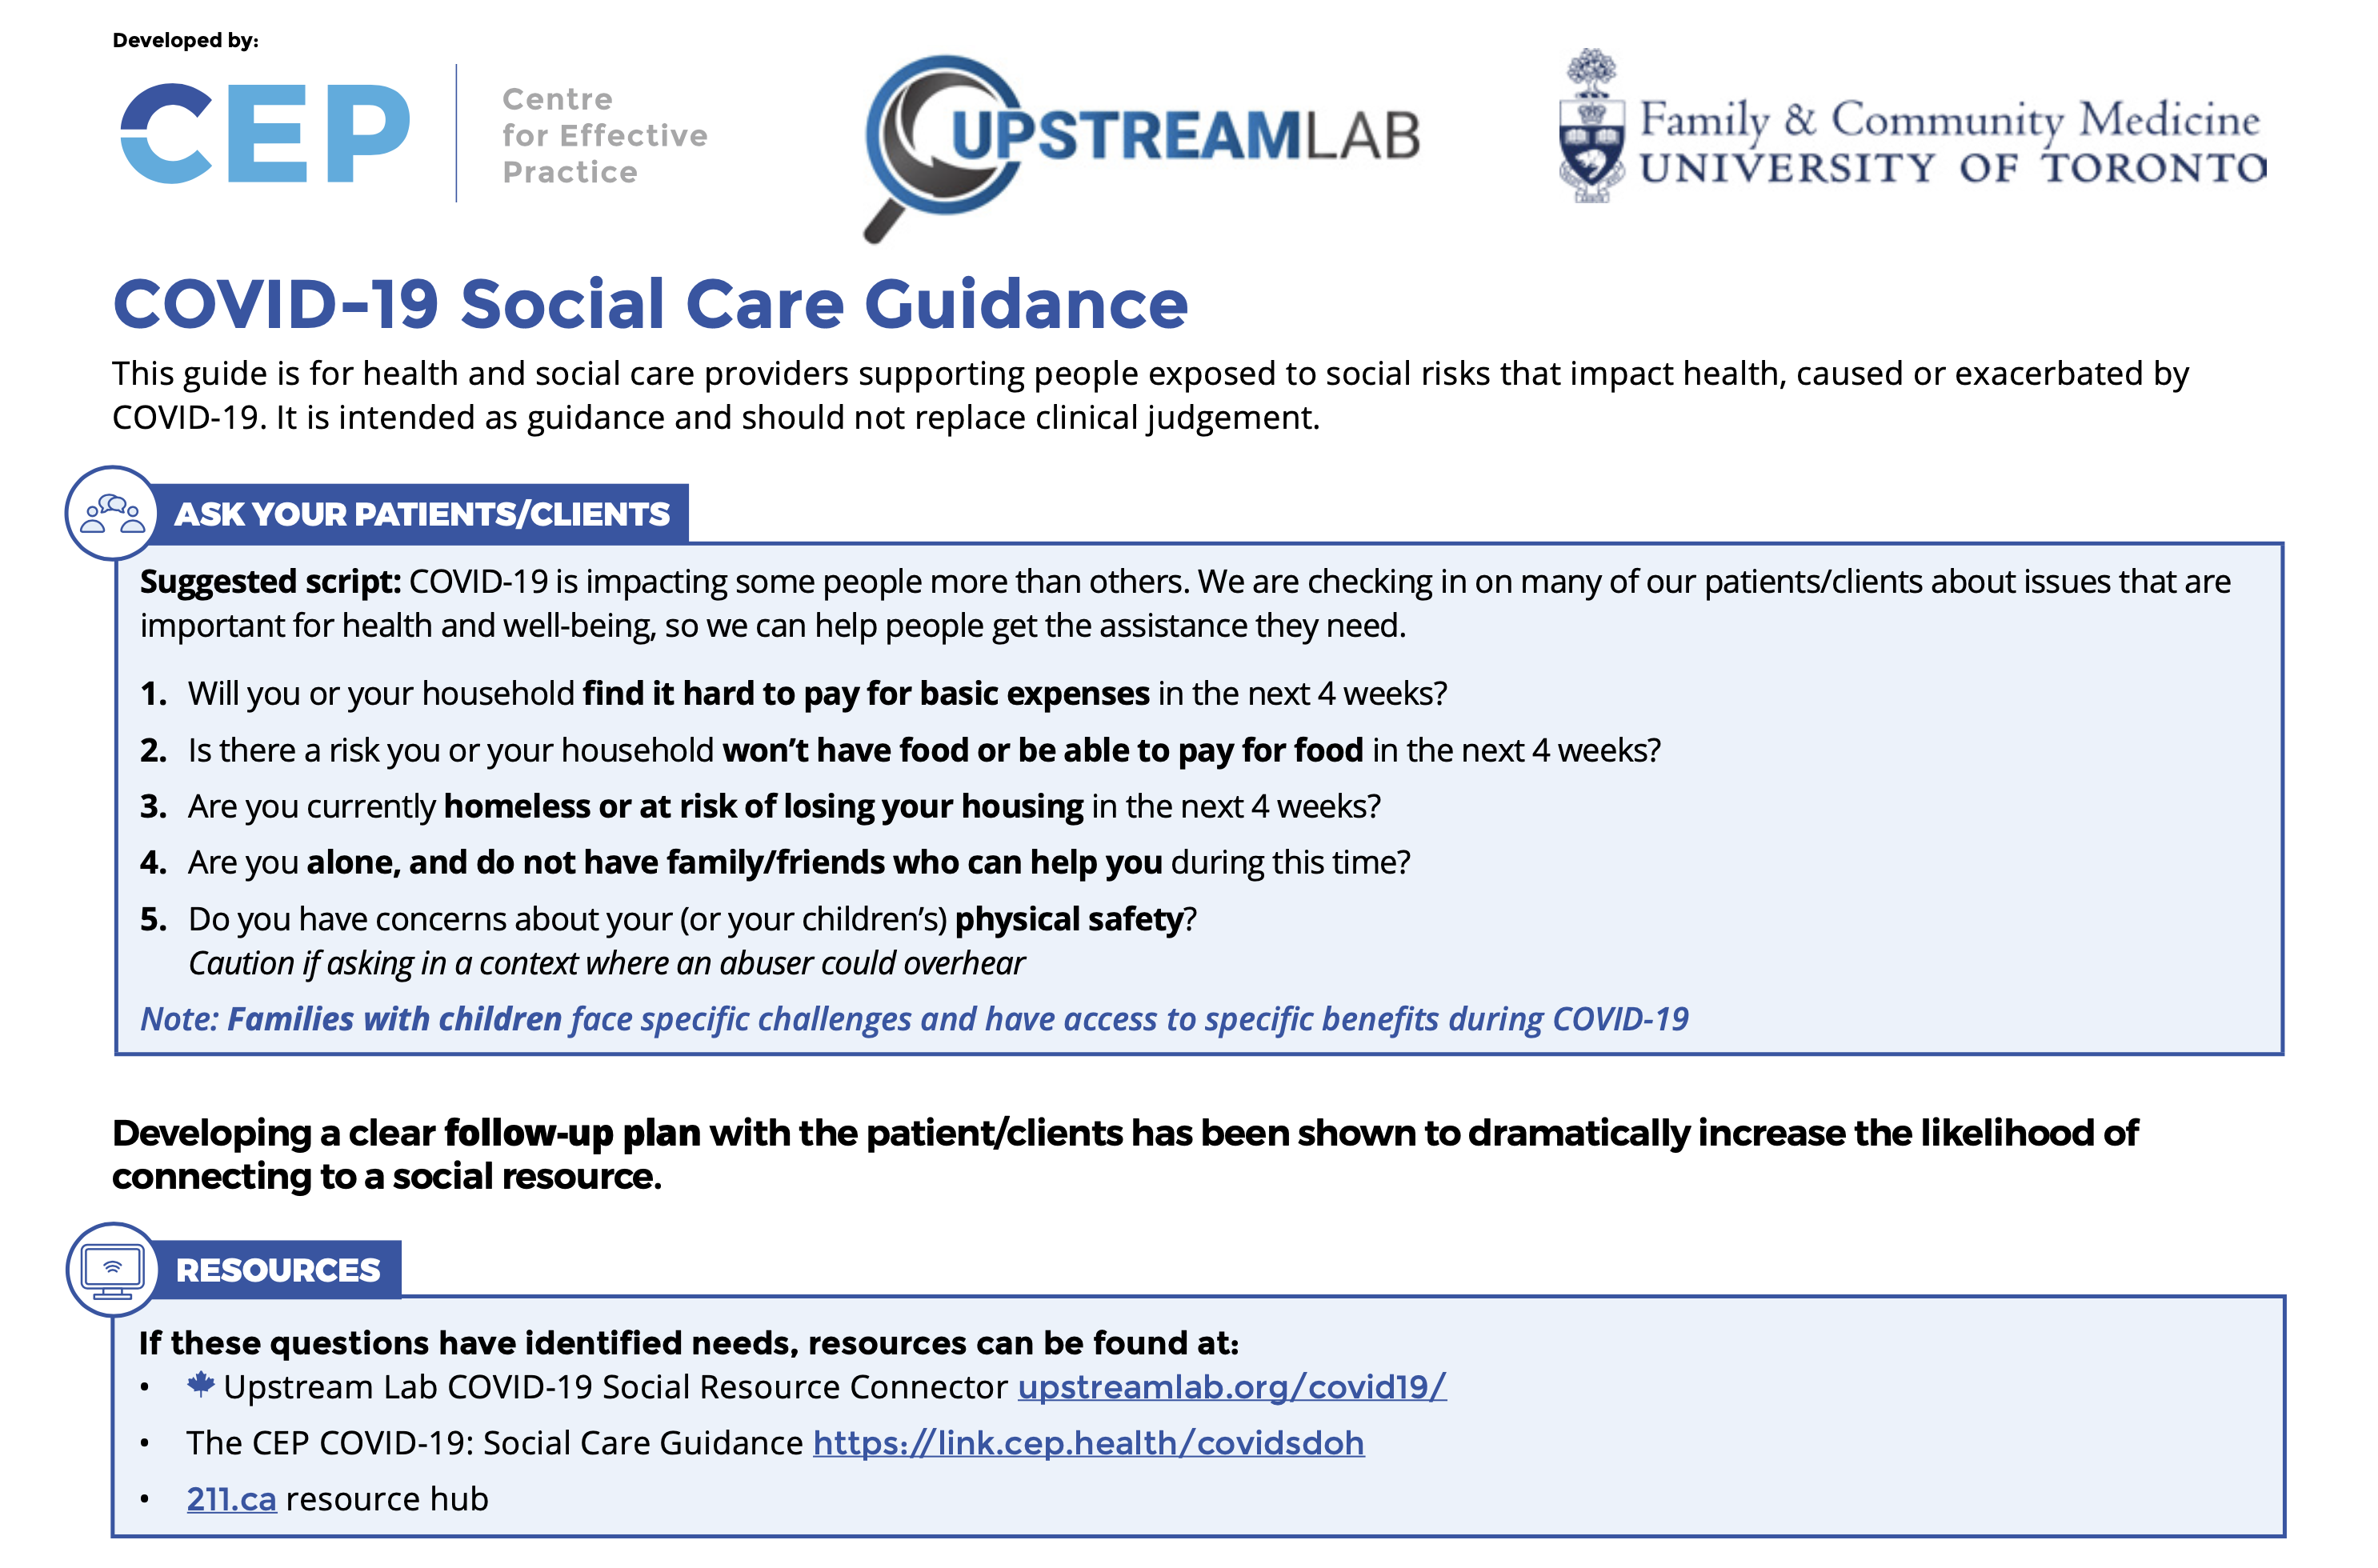 COVID-19 Social Care Guidance Tool